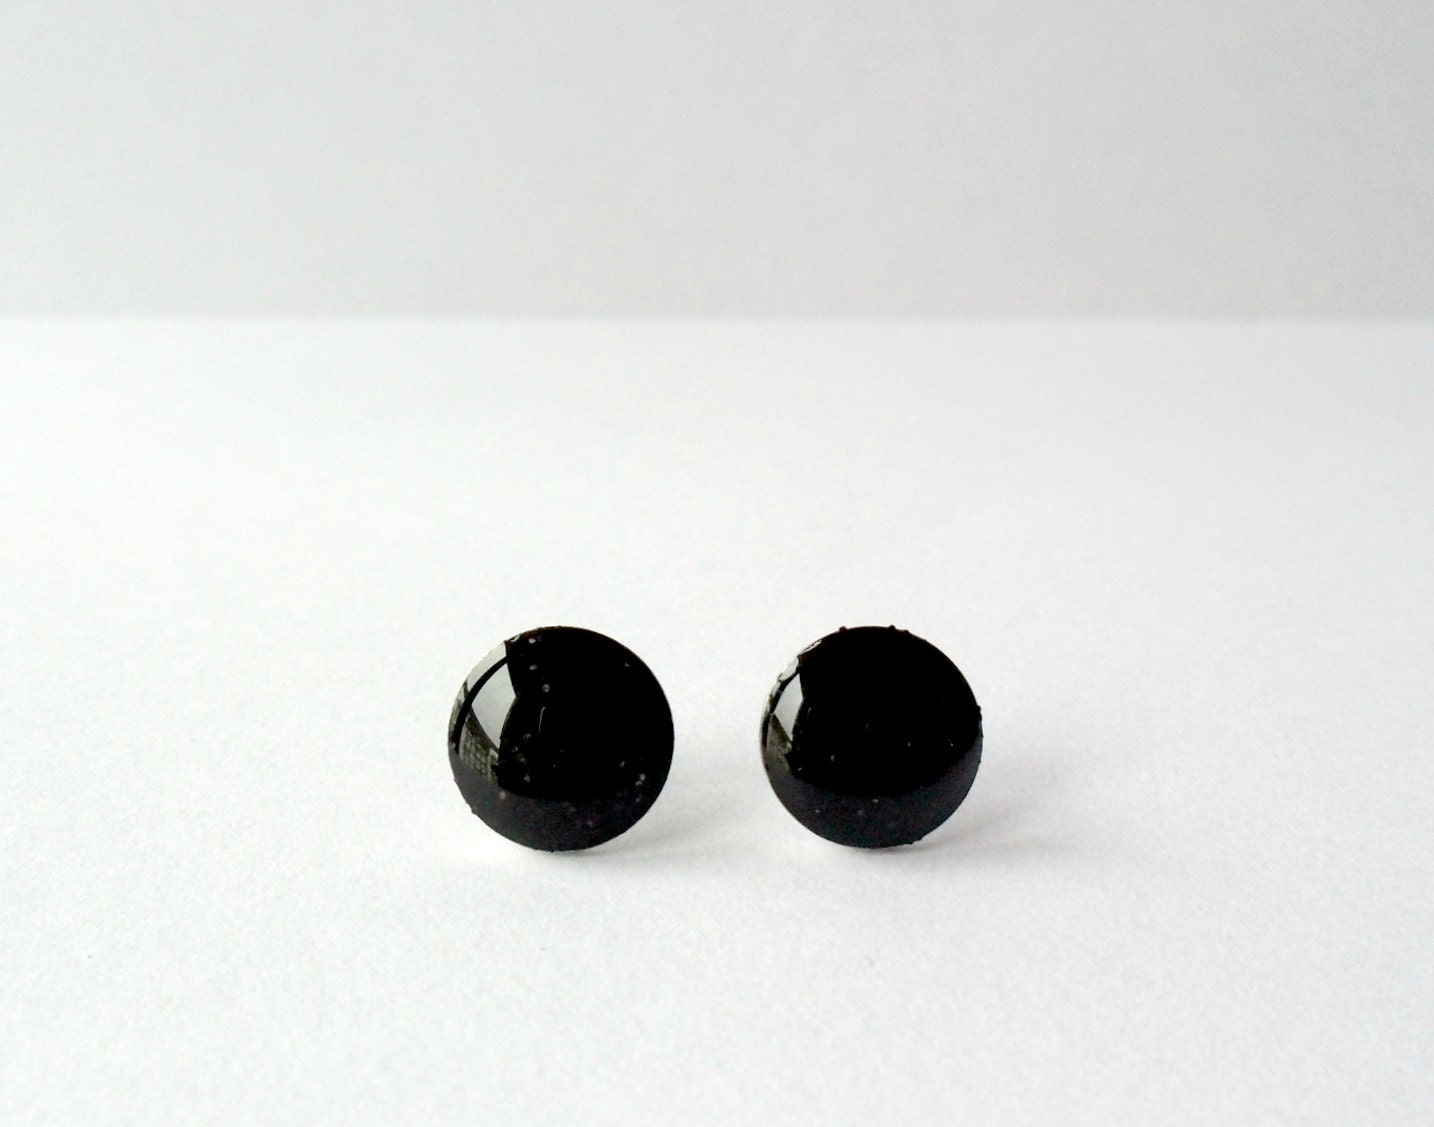 Black studs, round post earrings, everyday minimalist earrings, black jewelry